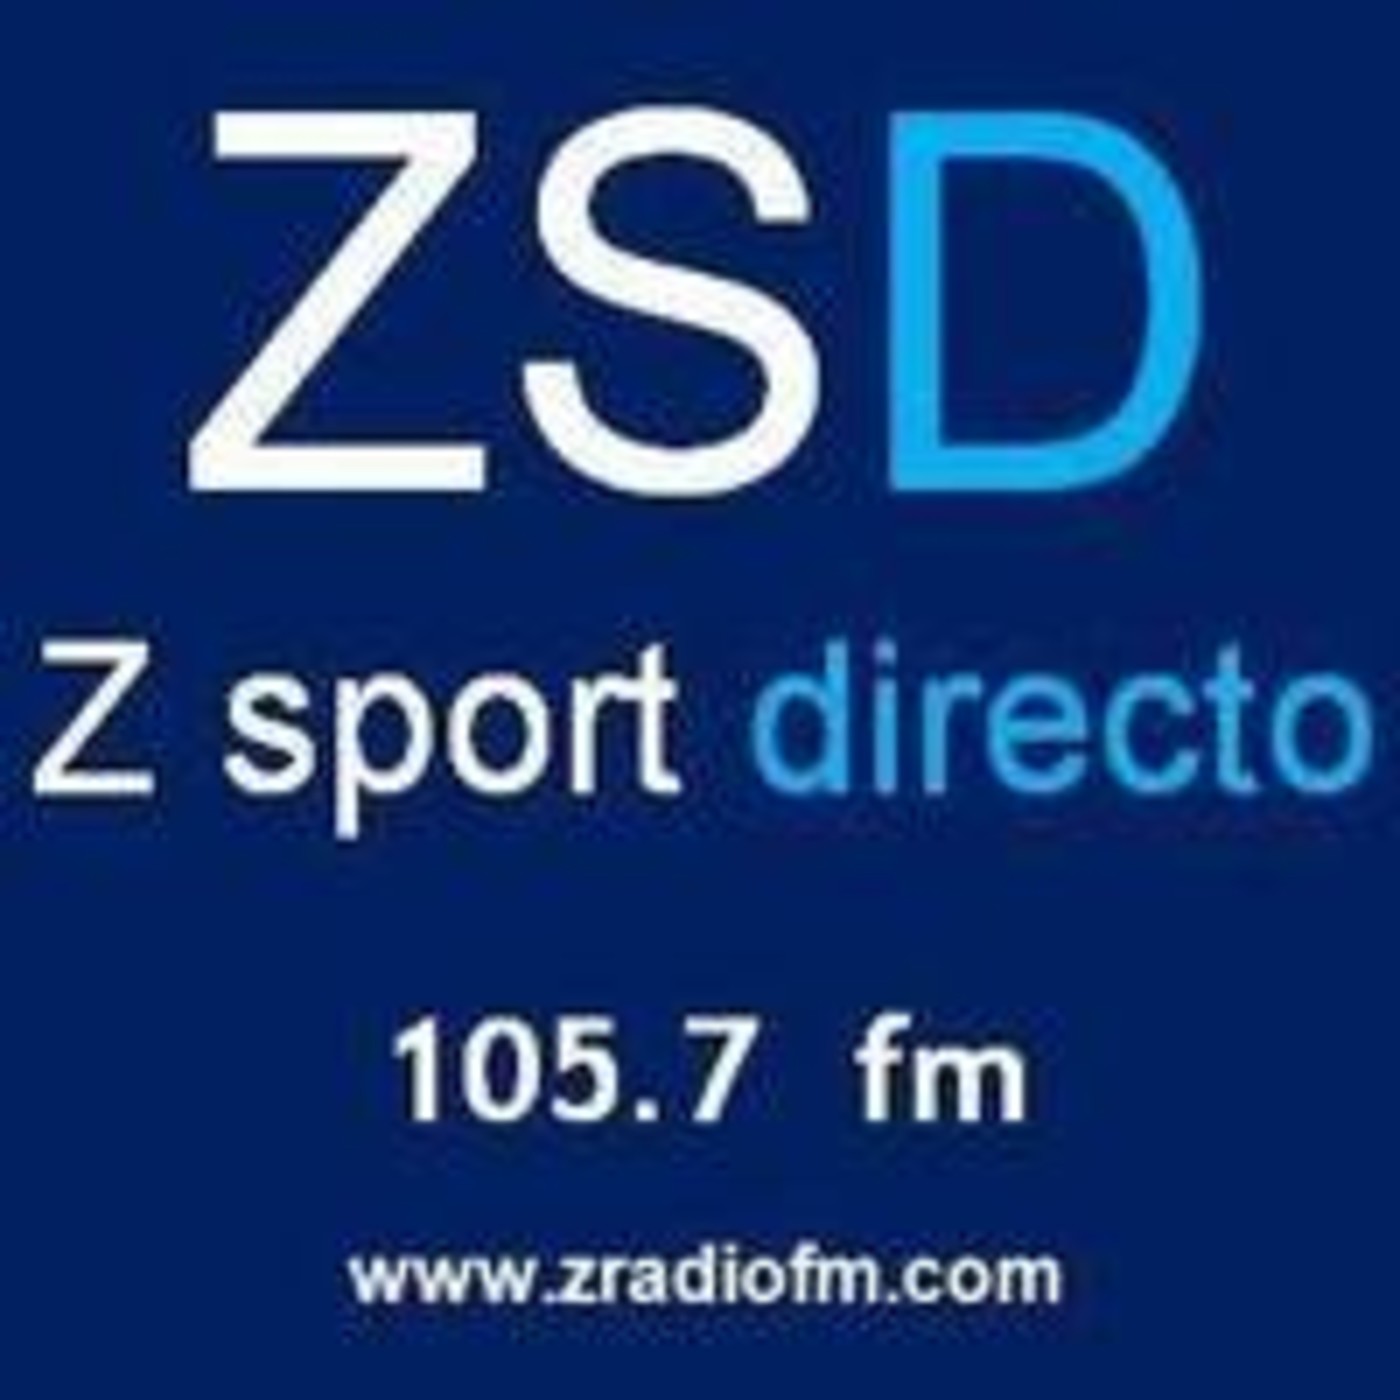 ZSportDirecto